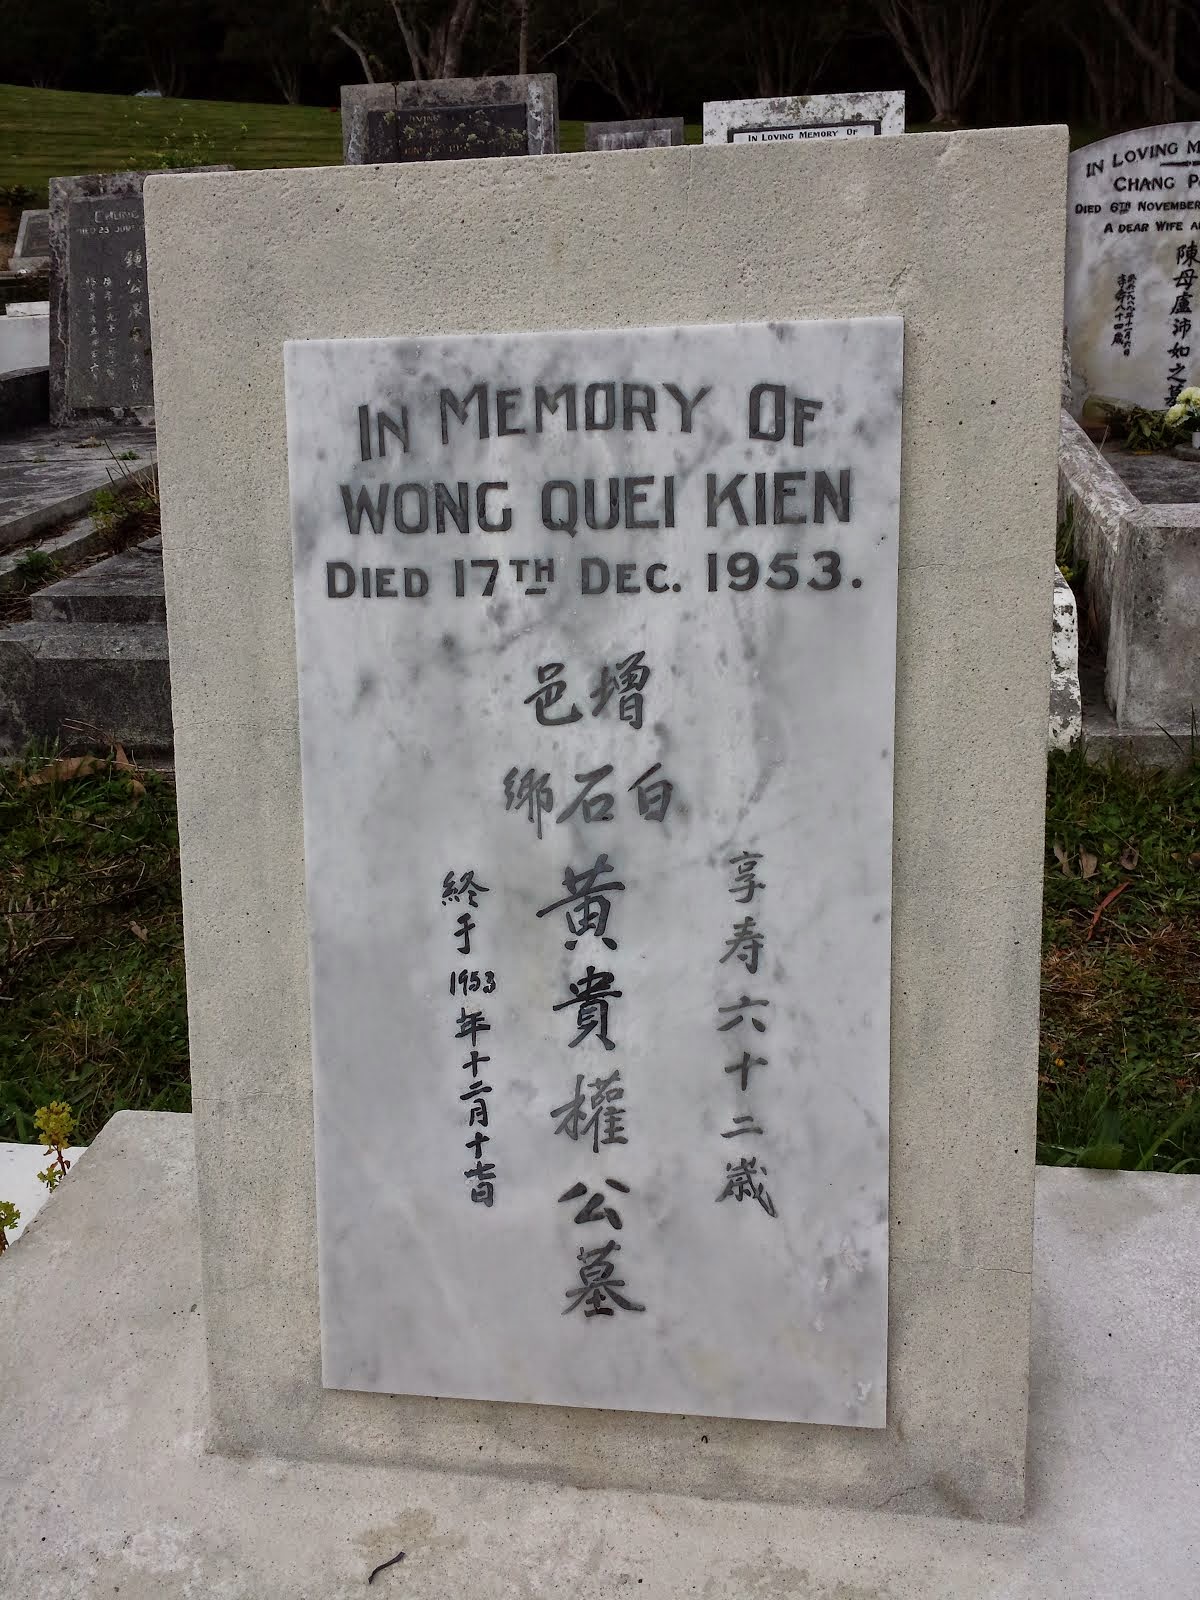 Headstone at Karori Cemetery